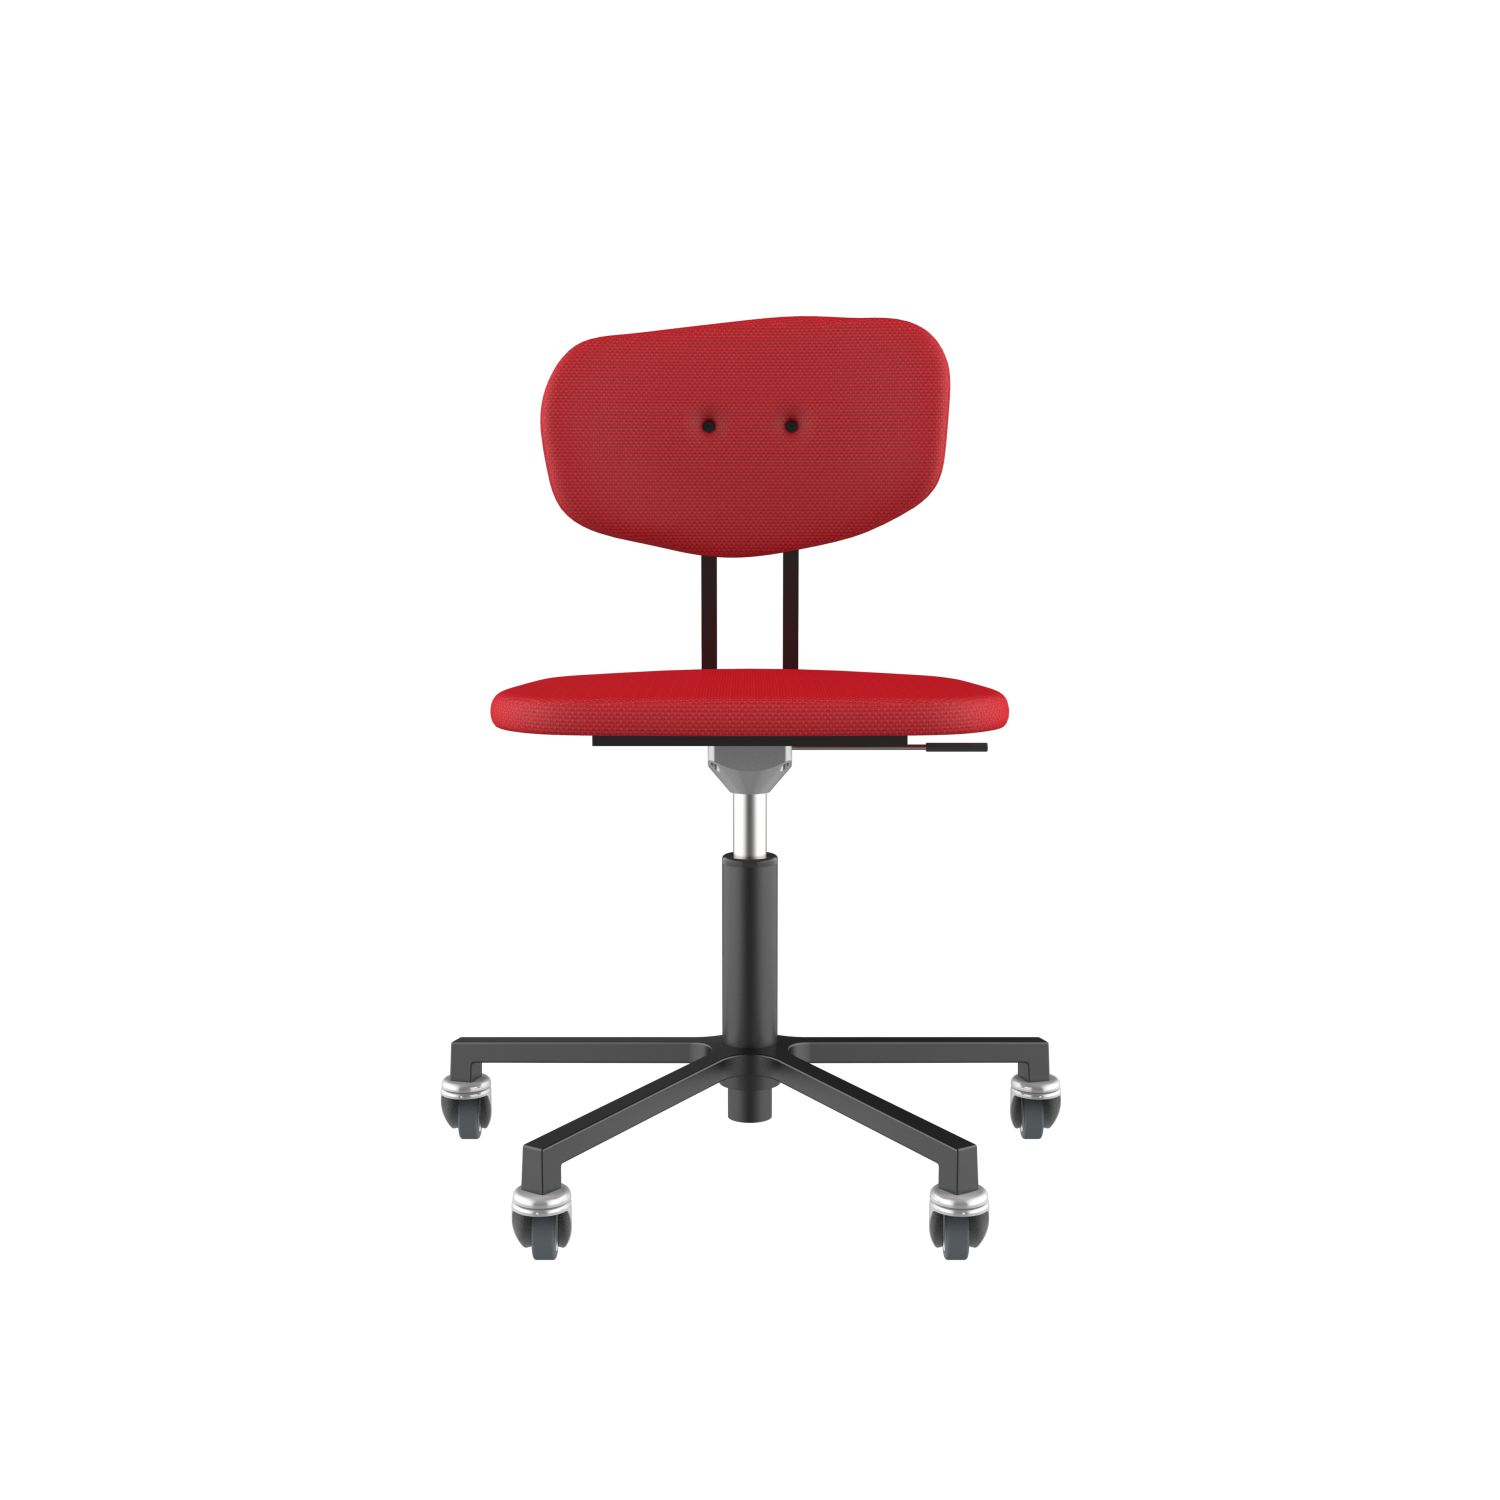 lensvelt maarten baas office chair without armrests backrest c grenada red 010 black ral9005 soft wheels